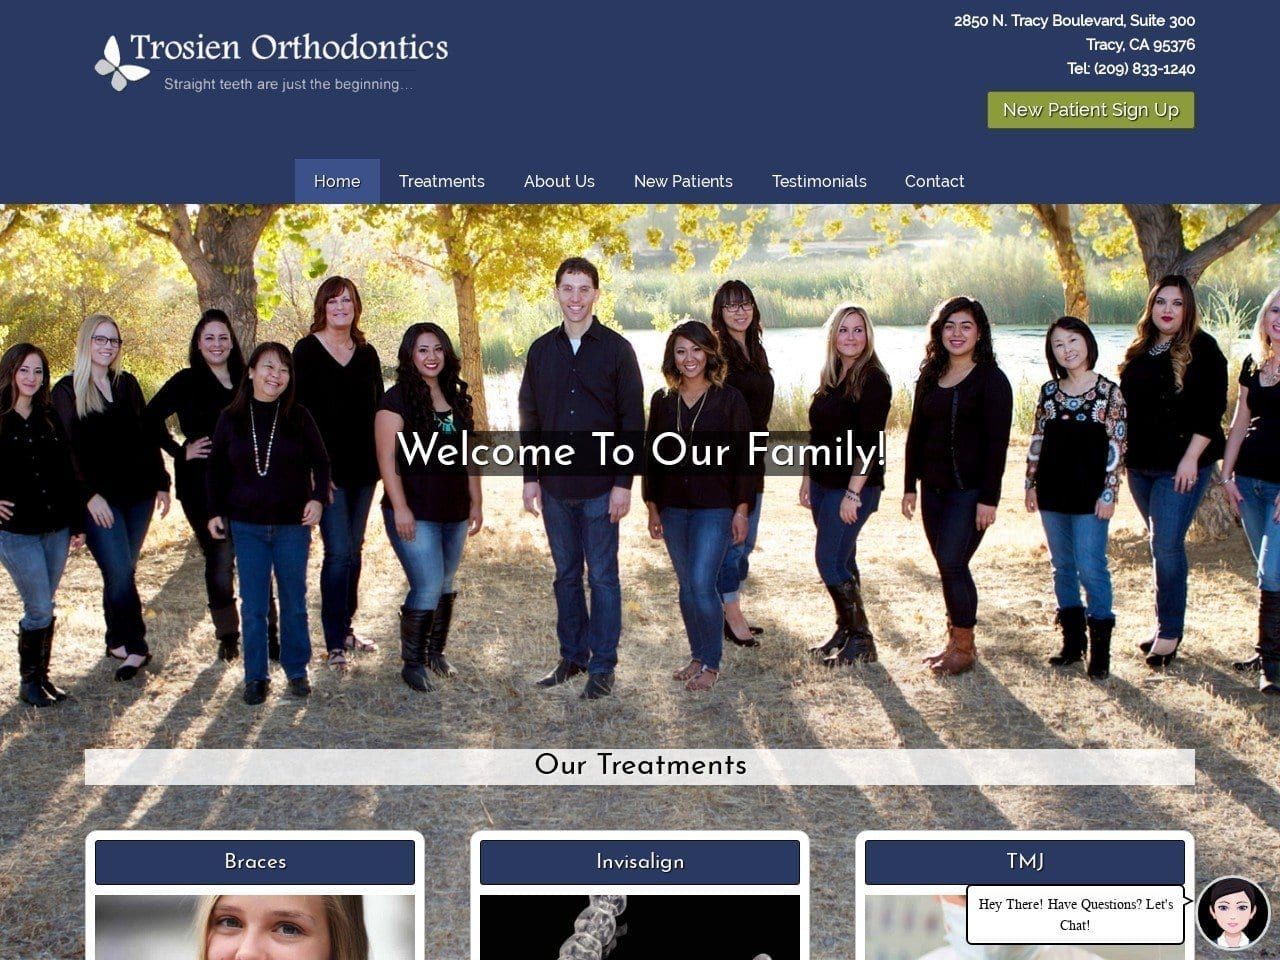 Trosien Orthodontics Website Screenshot from trosienorthodontics.com